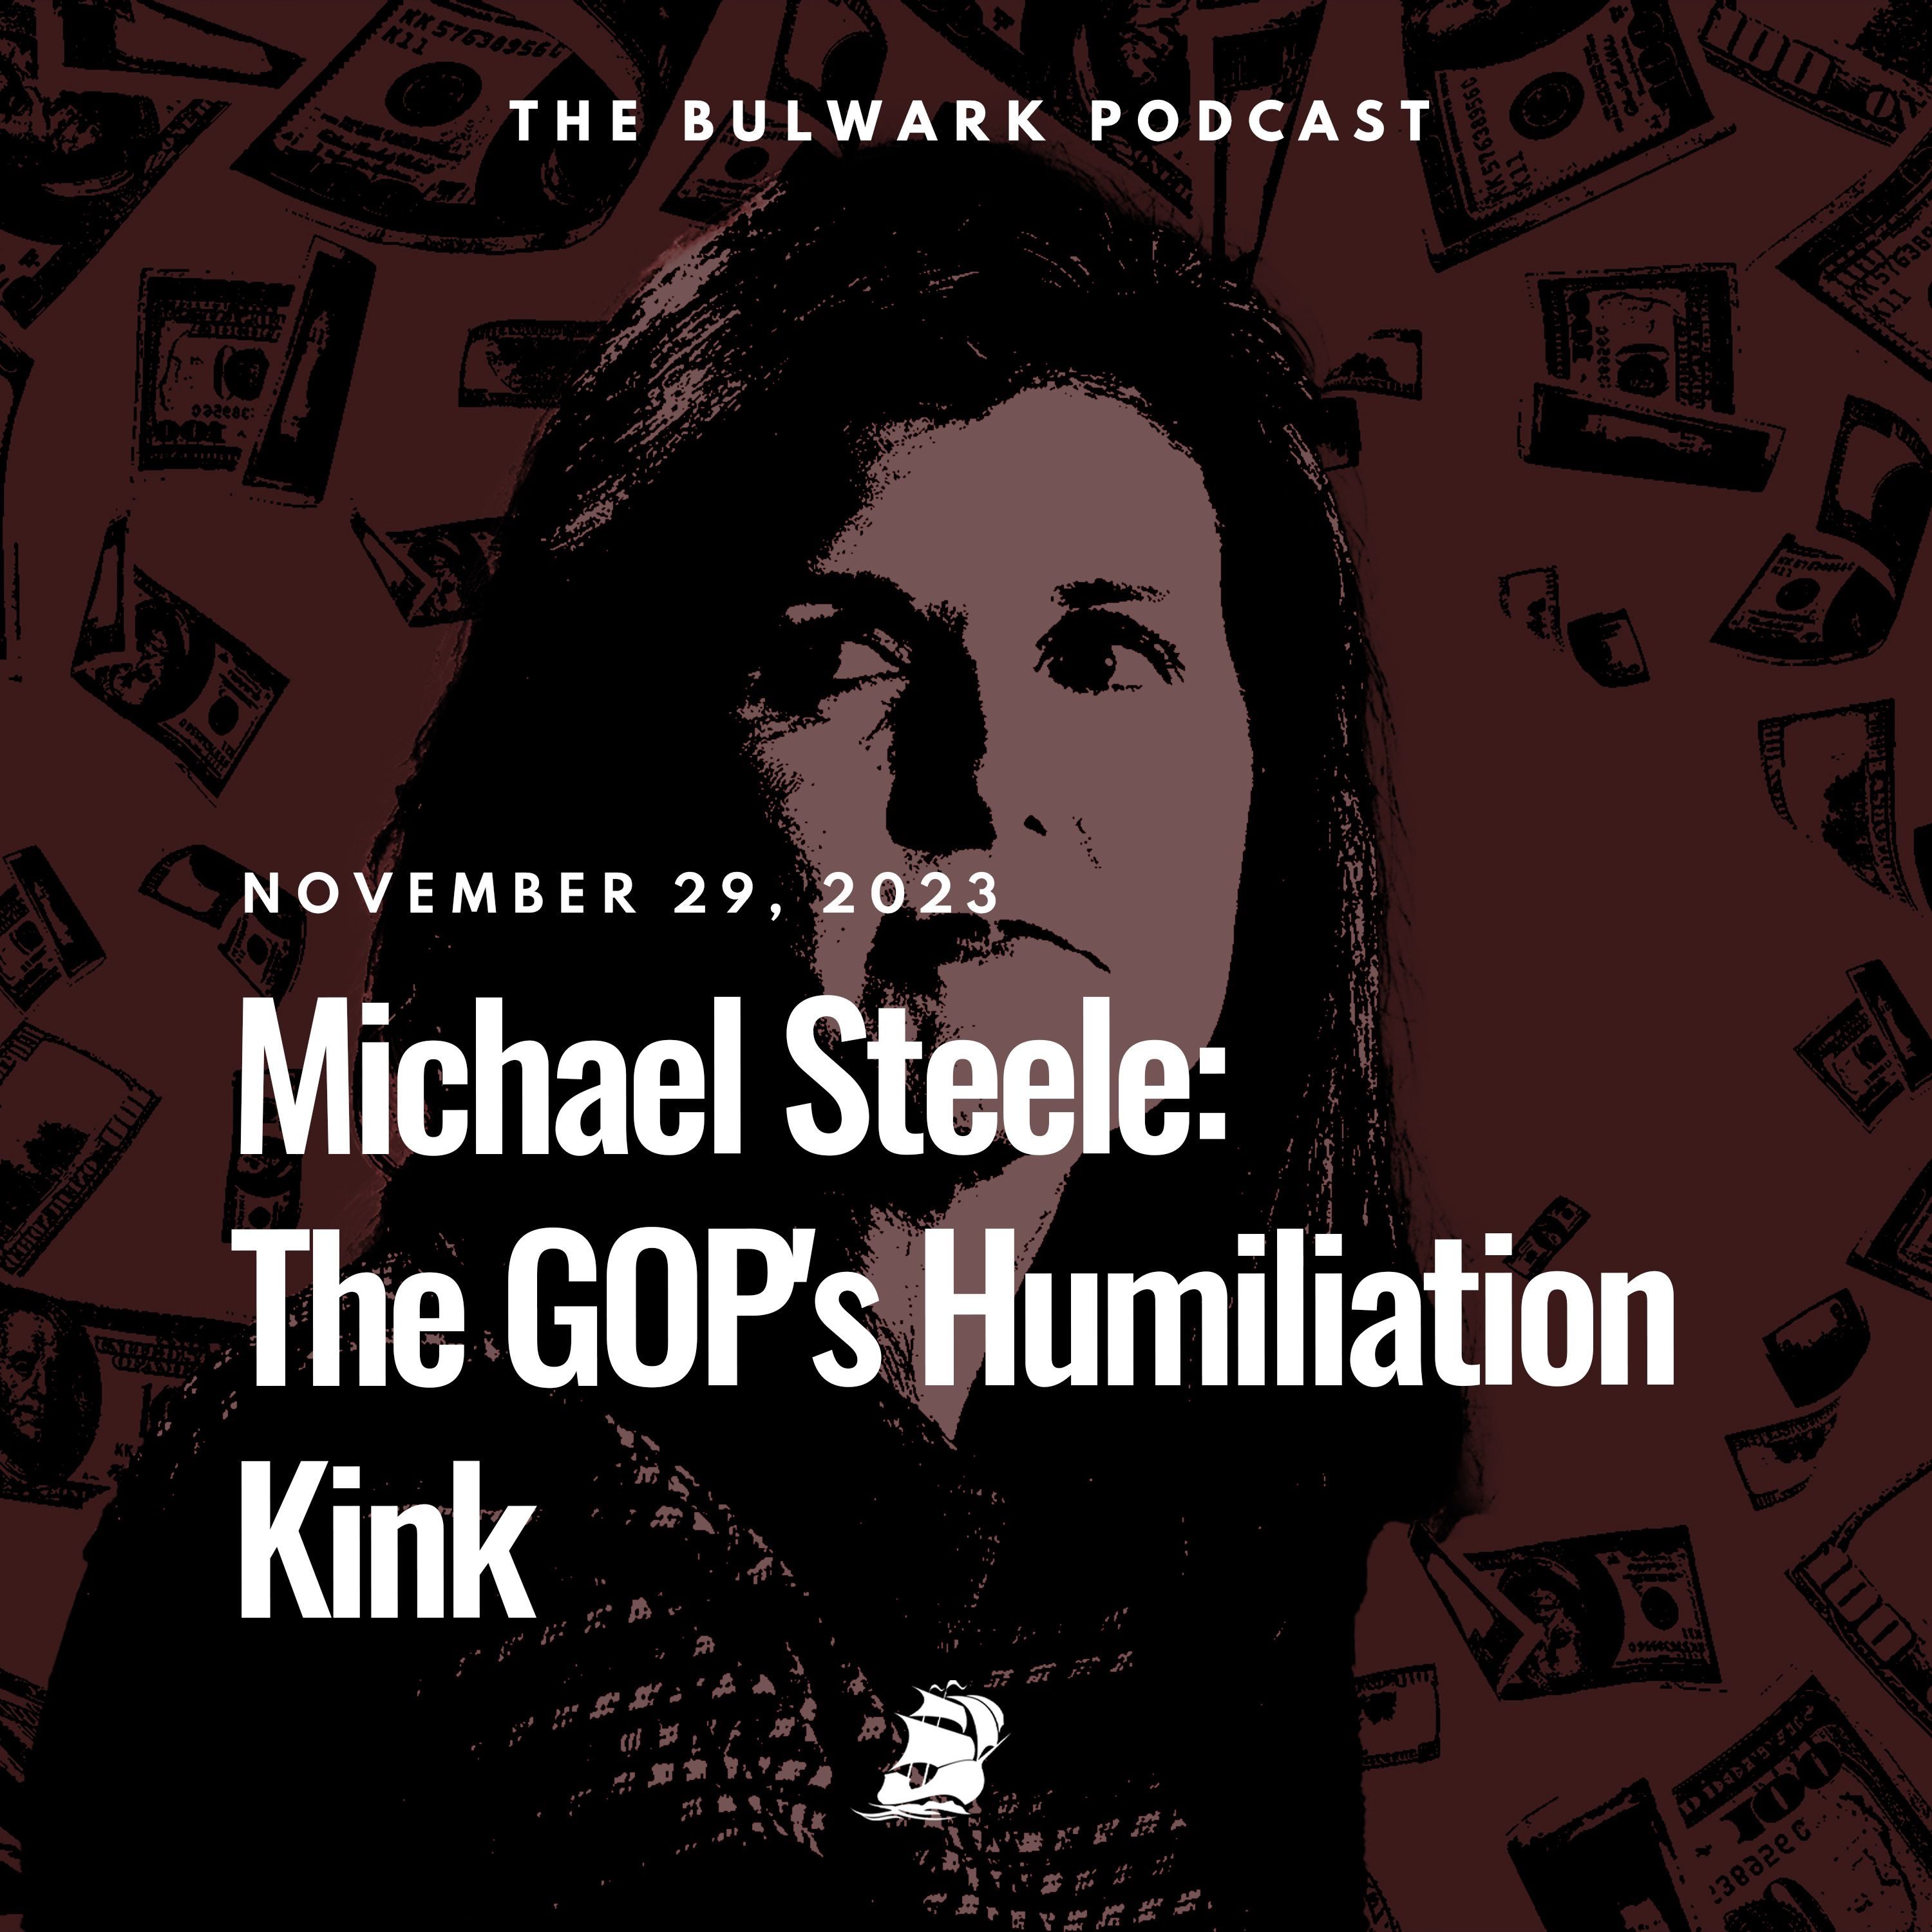 Michael Steele: The GOP's Humiliation Kink